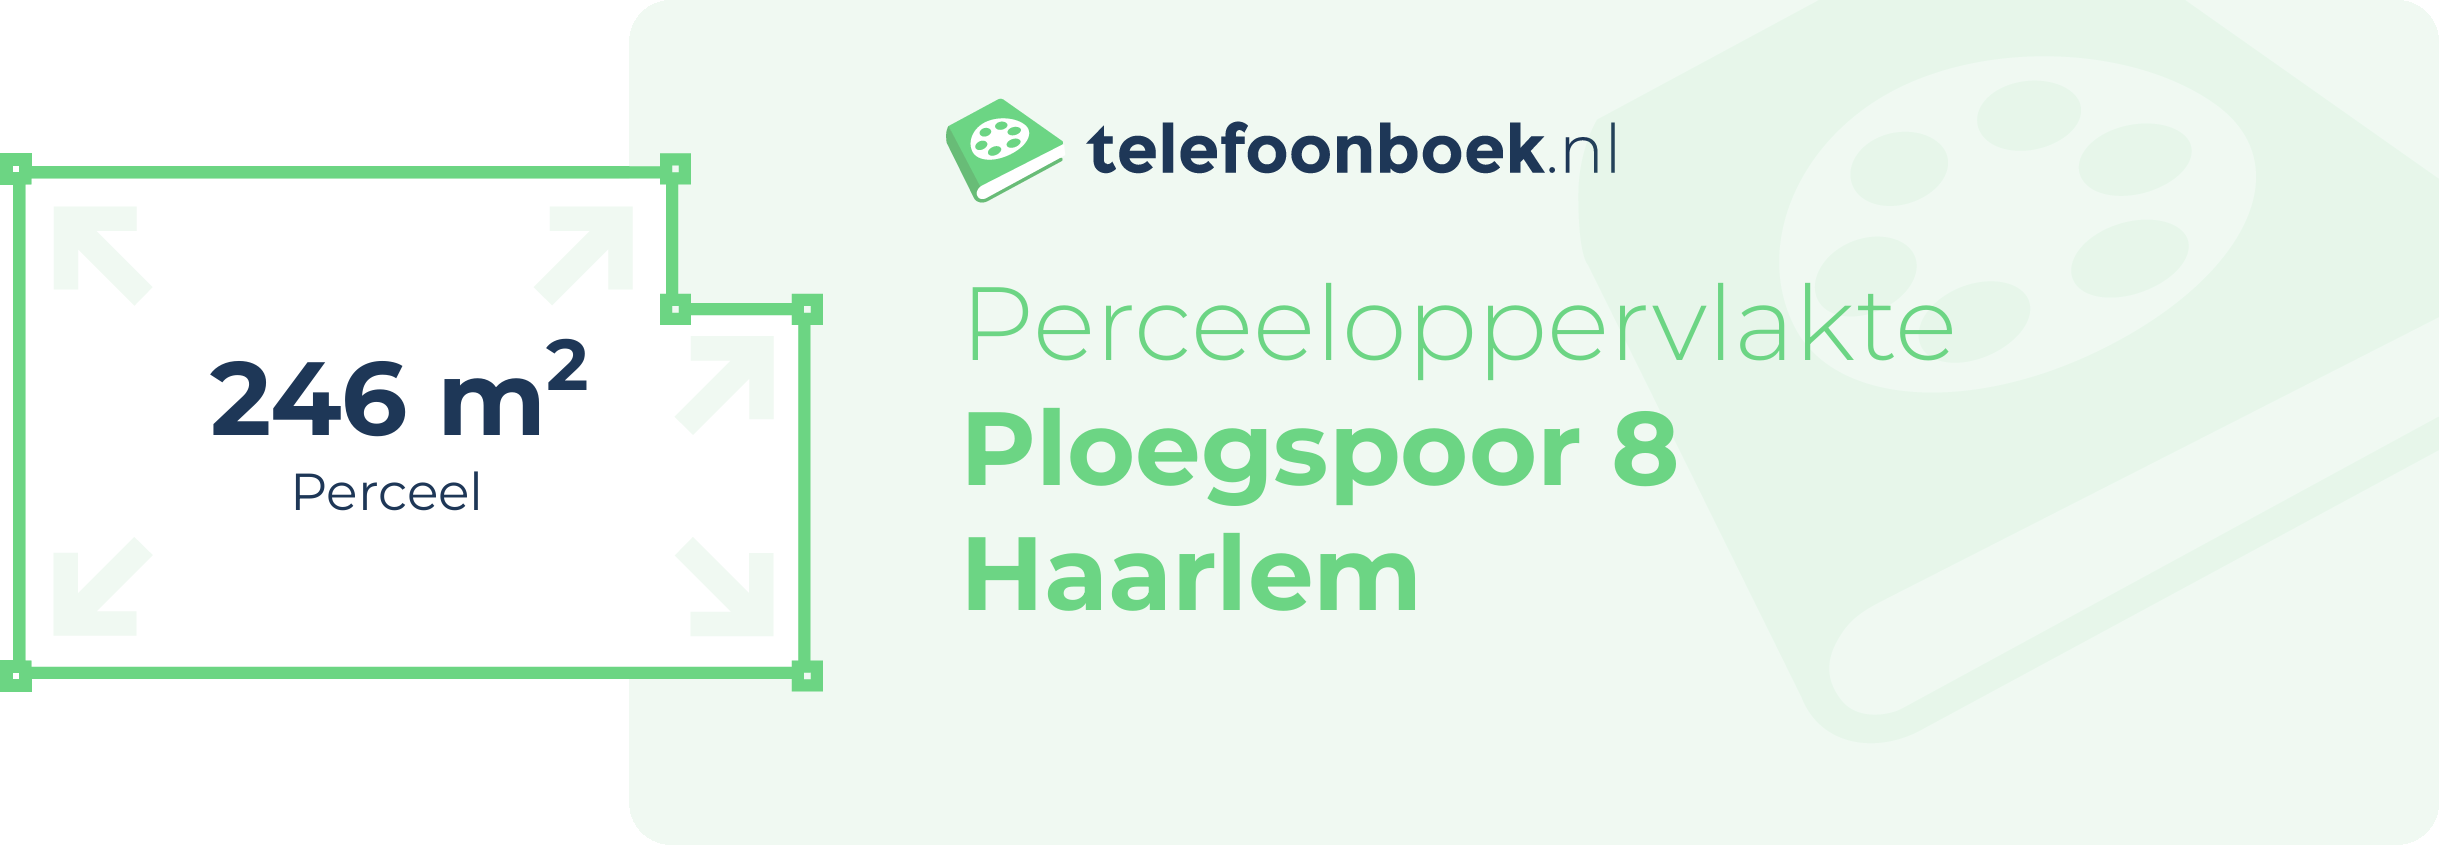 Perceeloppervlakte Ploegspoor 8 Haarlem